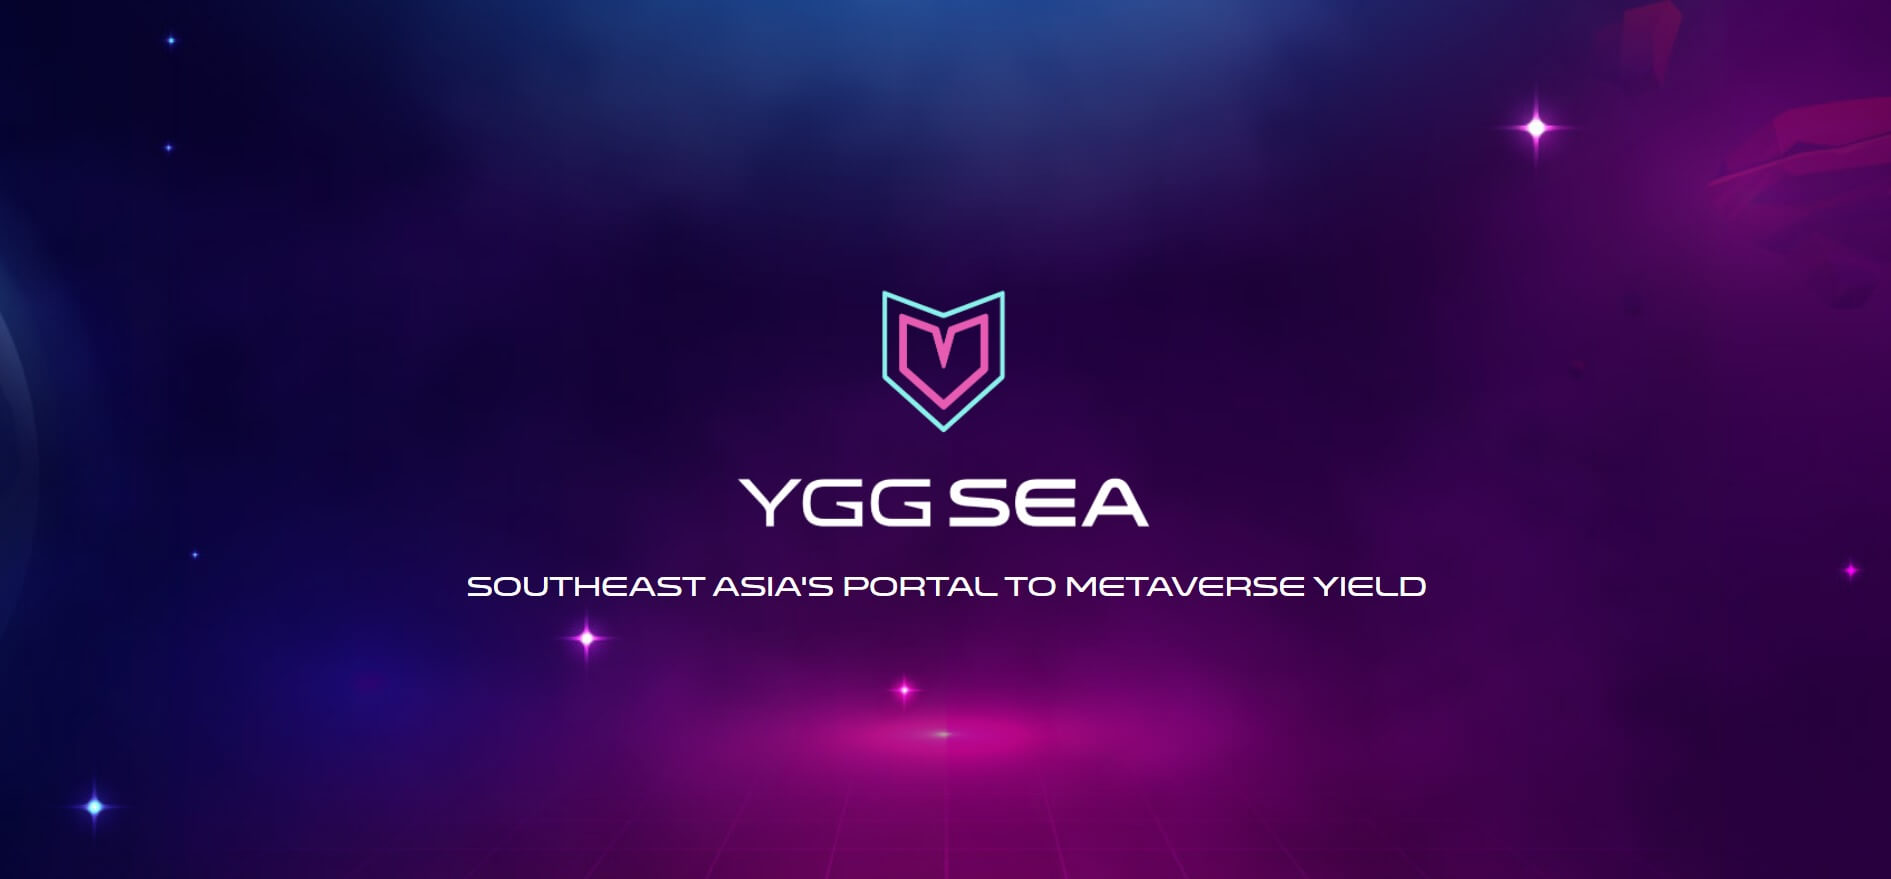 YGG SEA Platform Details